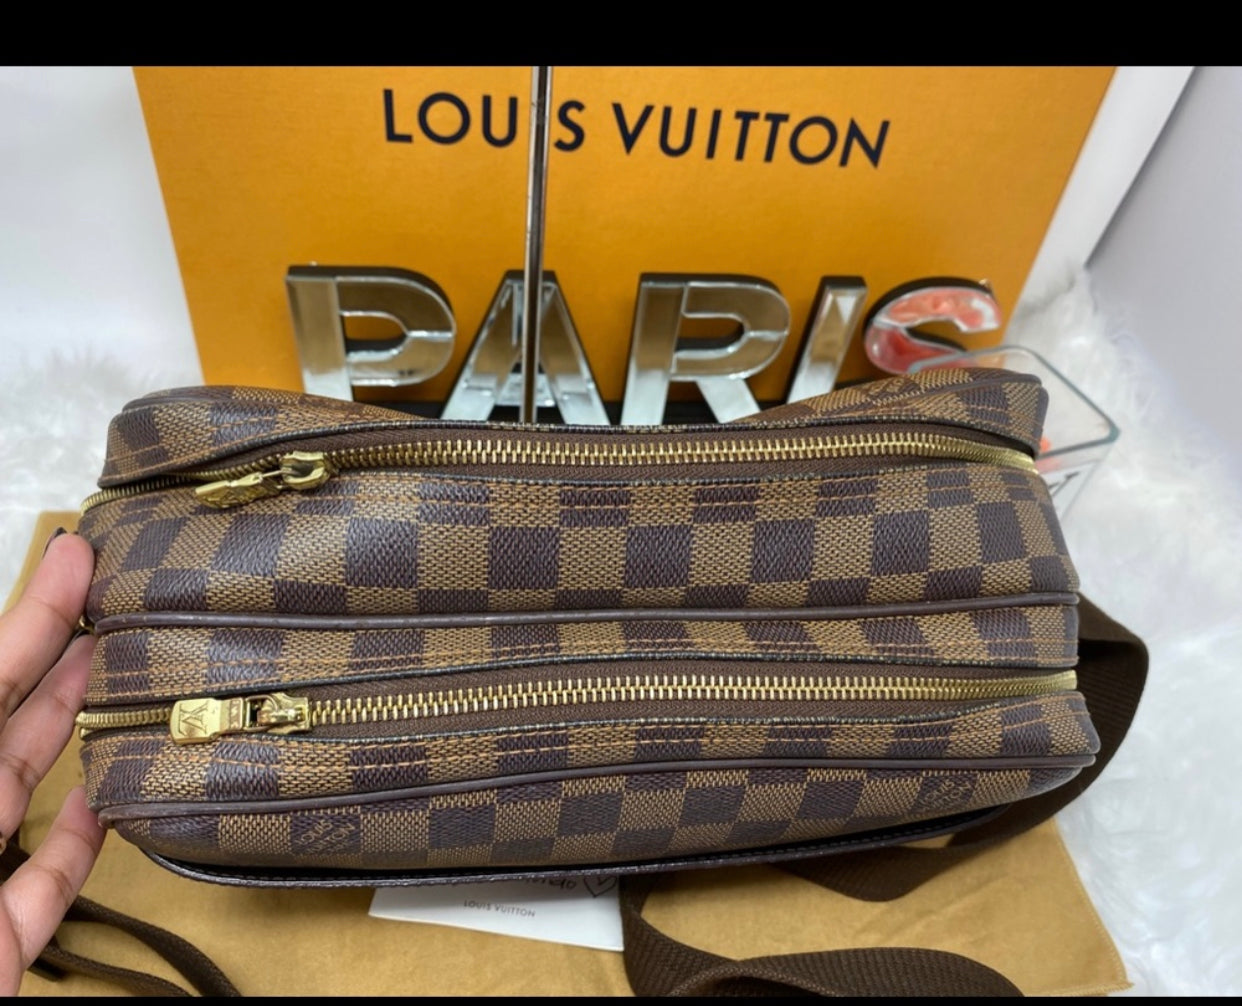 Louis Vuitton Paris handbag  Shopee Philippines